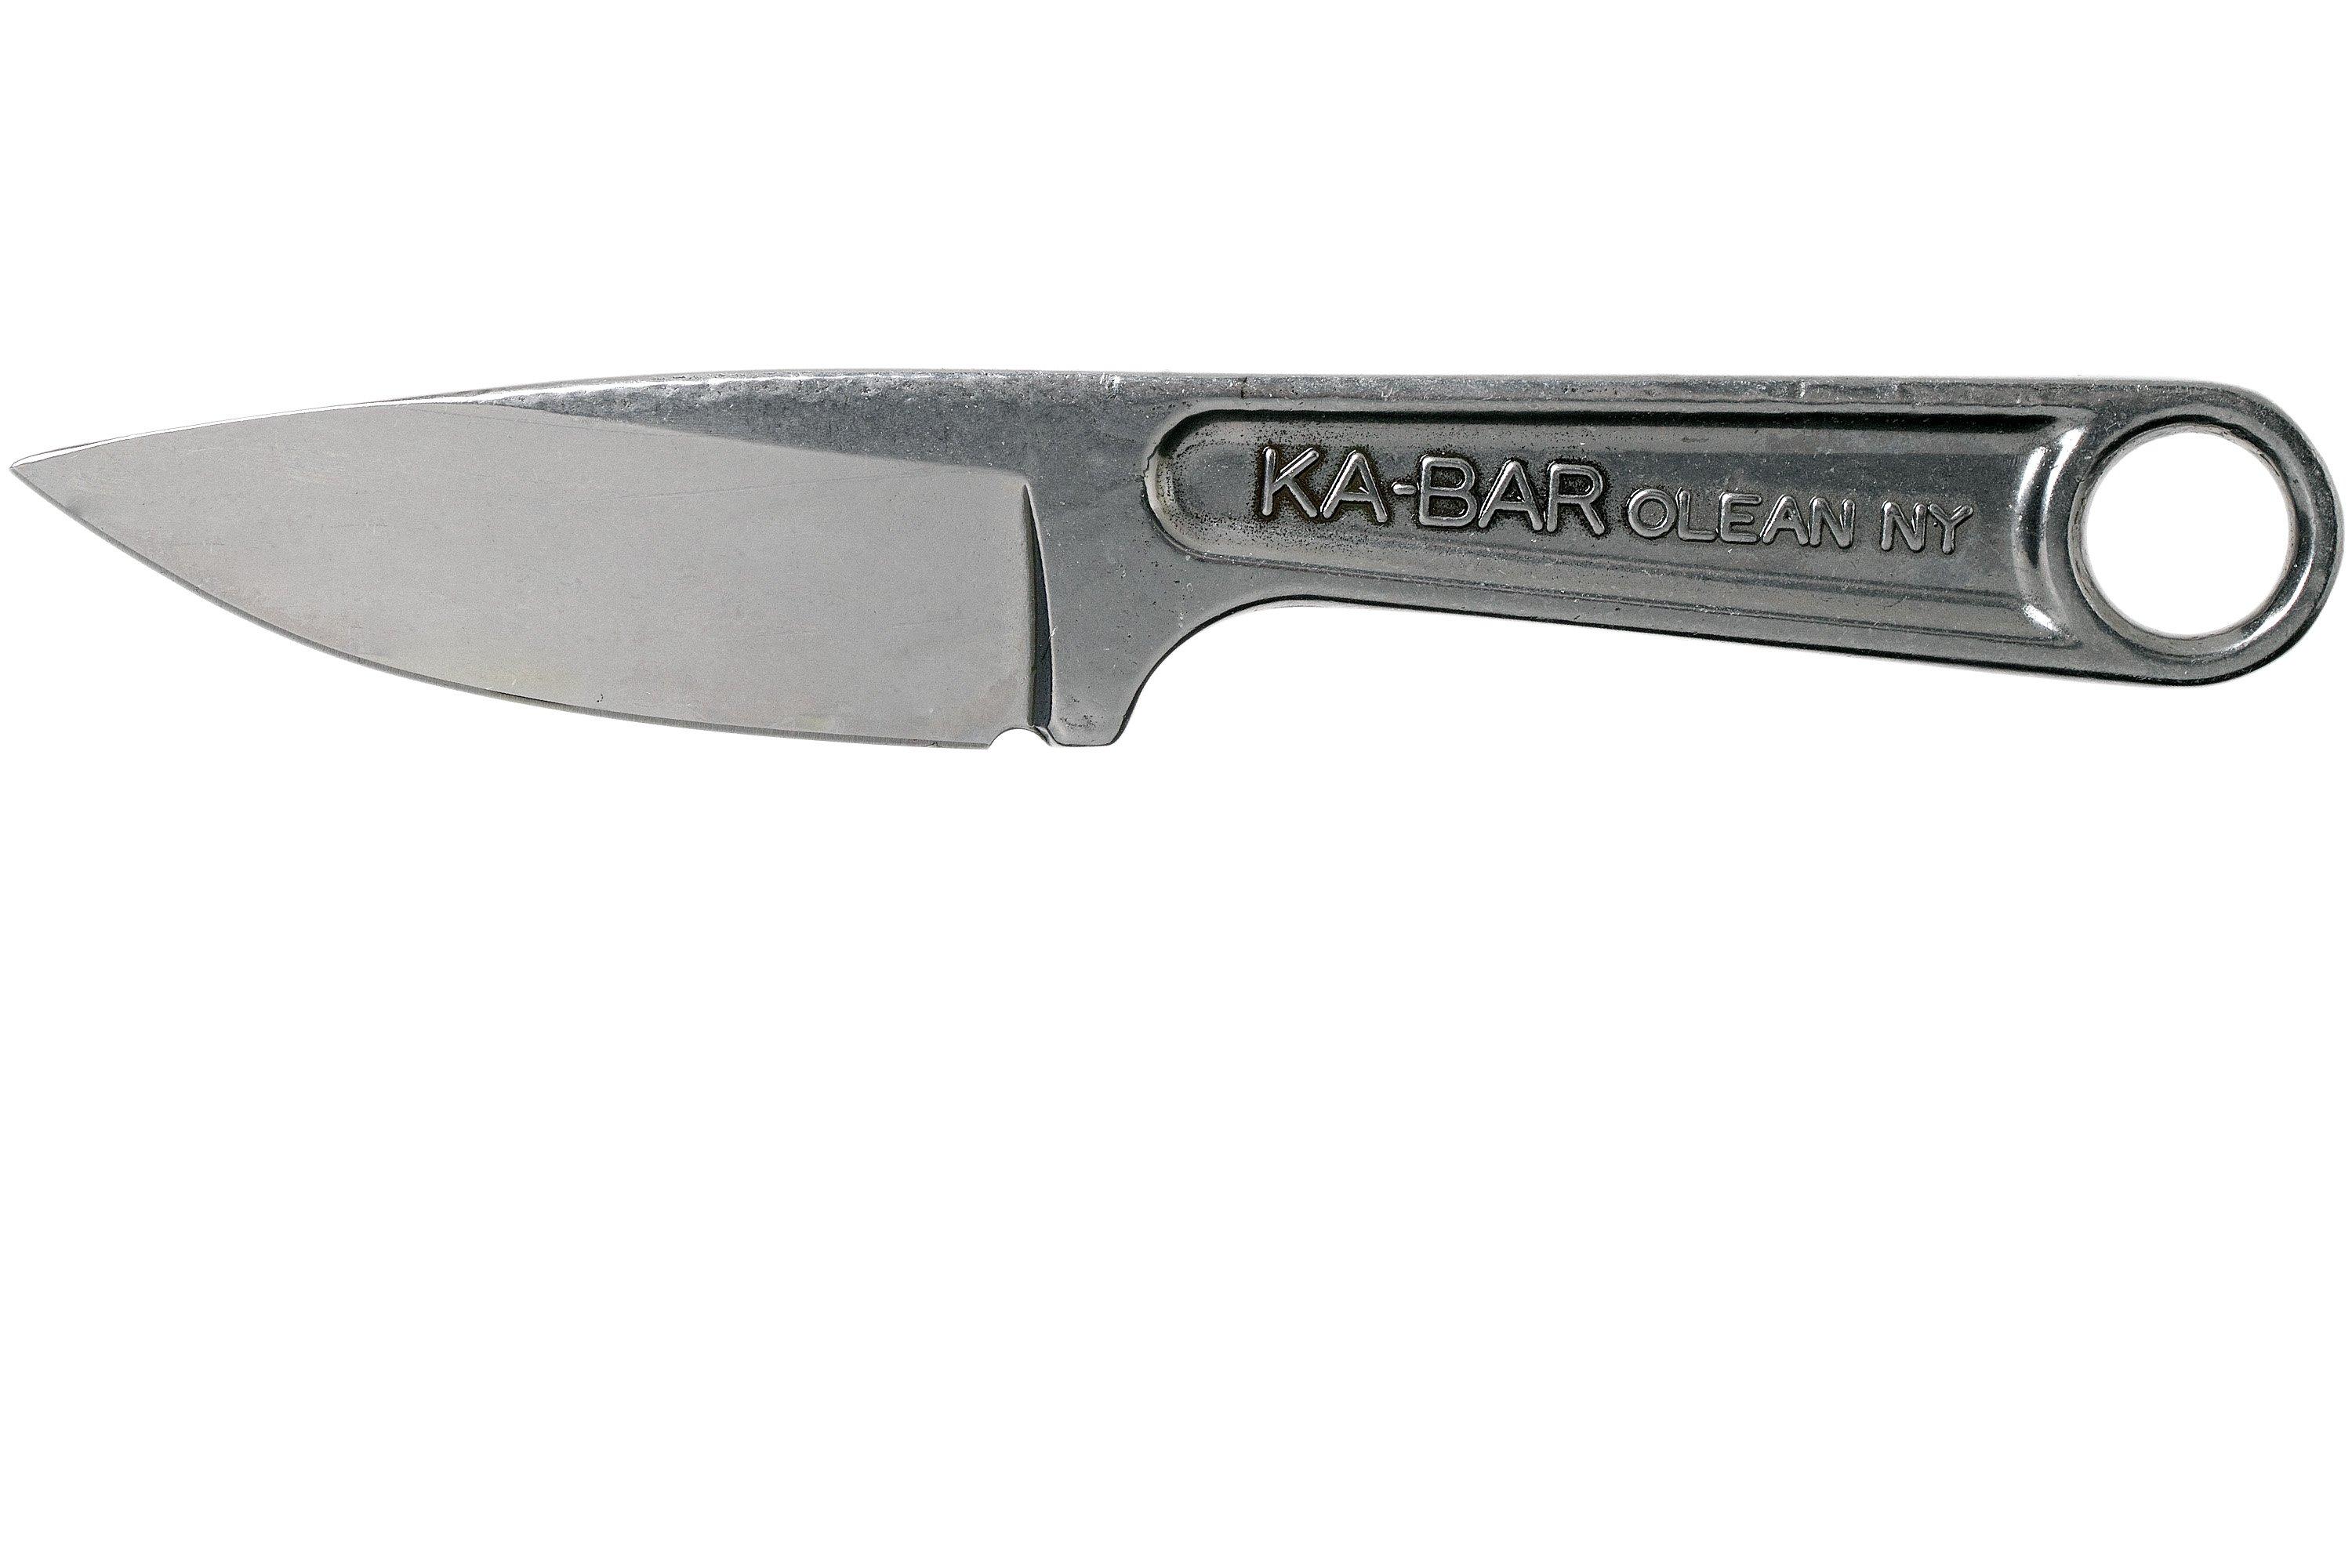 KA-BAR Wrench Knife 1119 neck knife | Advantageously shopping at ...